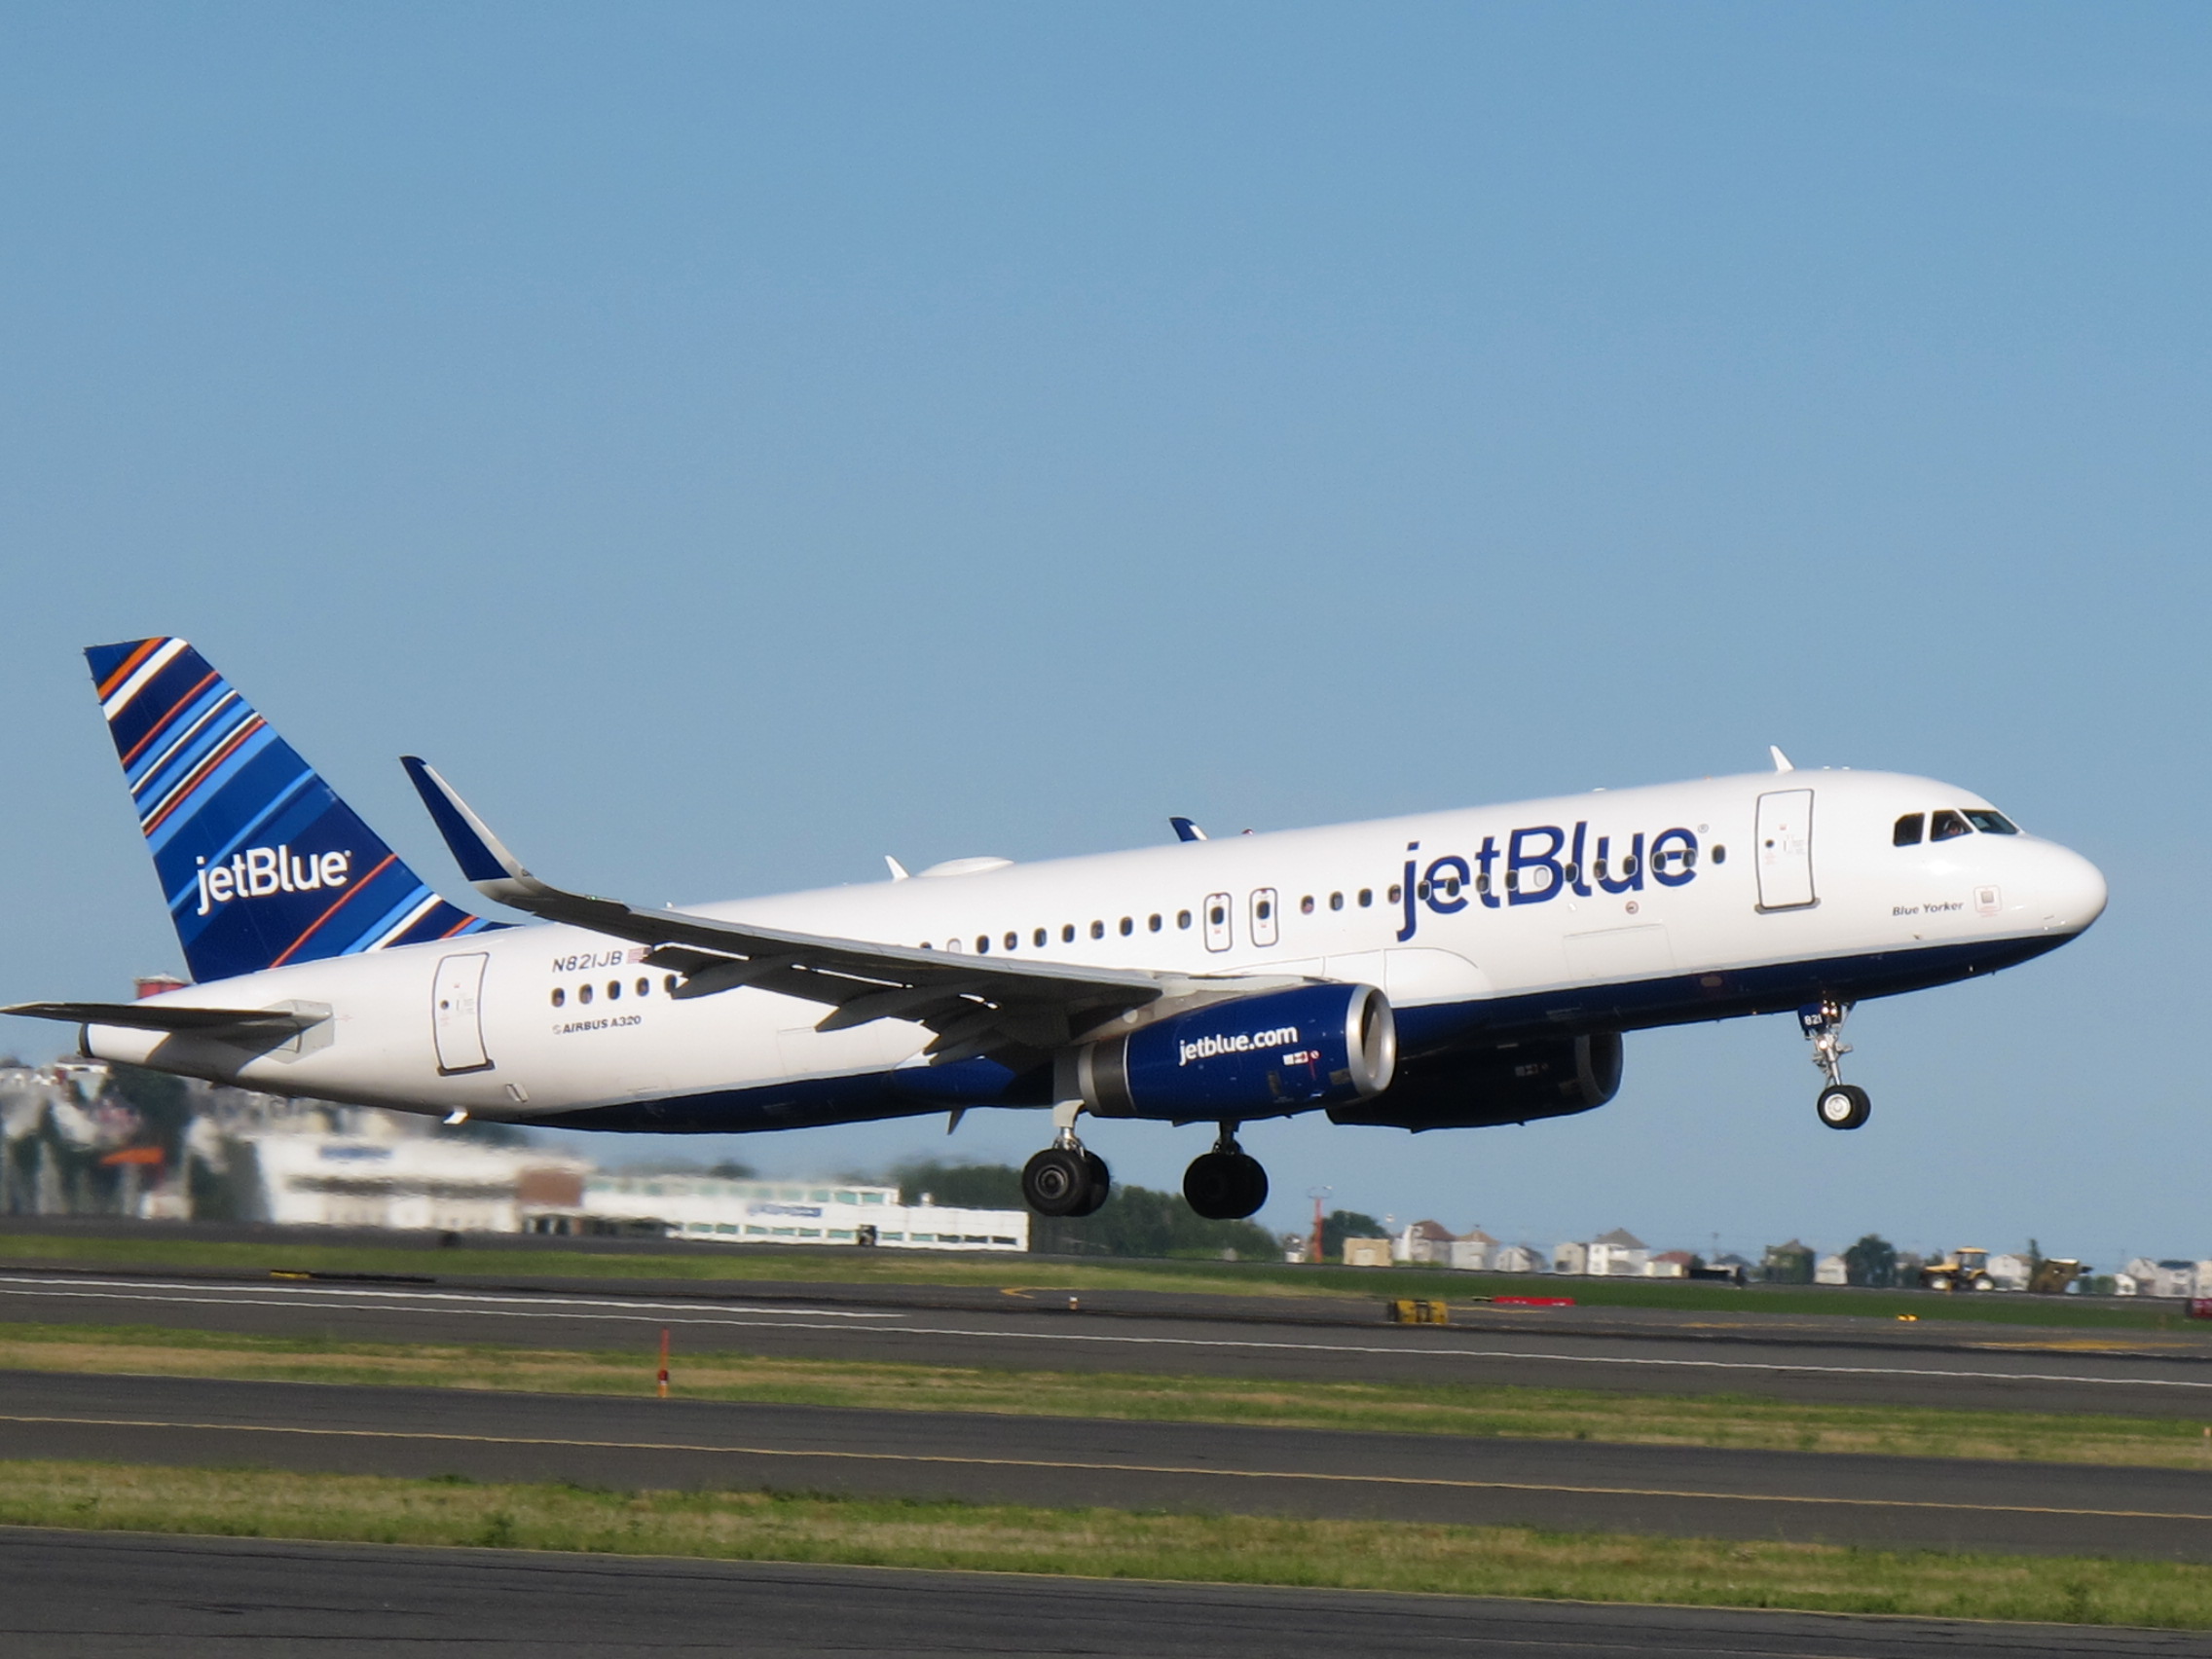 Deal Alert: JetBlue Winter Sale Has Flights Starting At $39